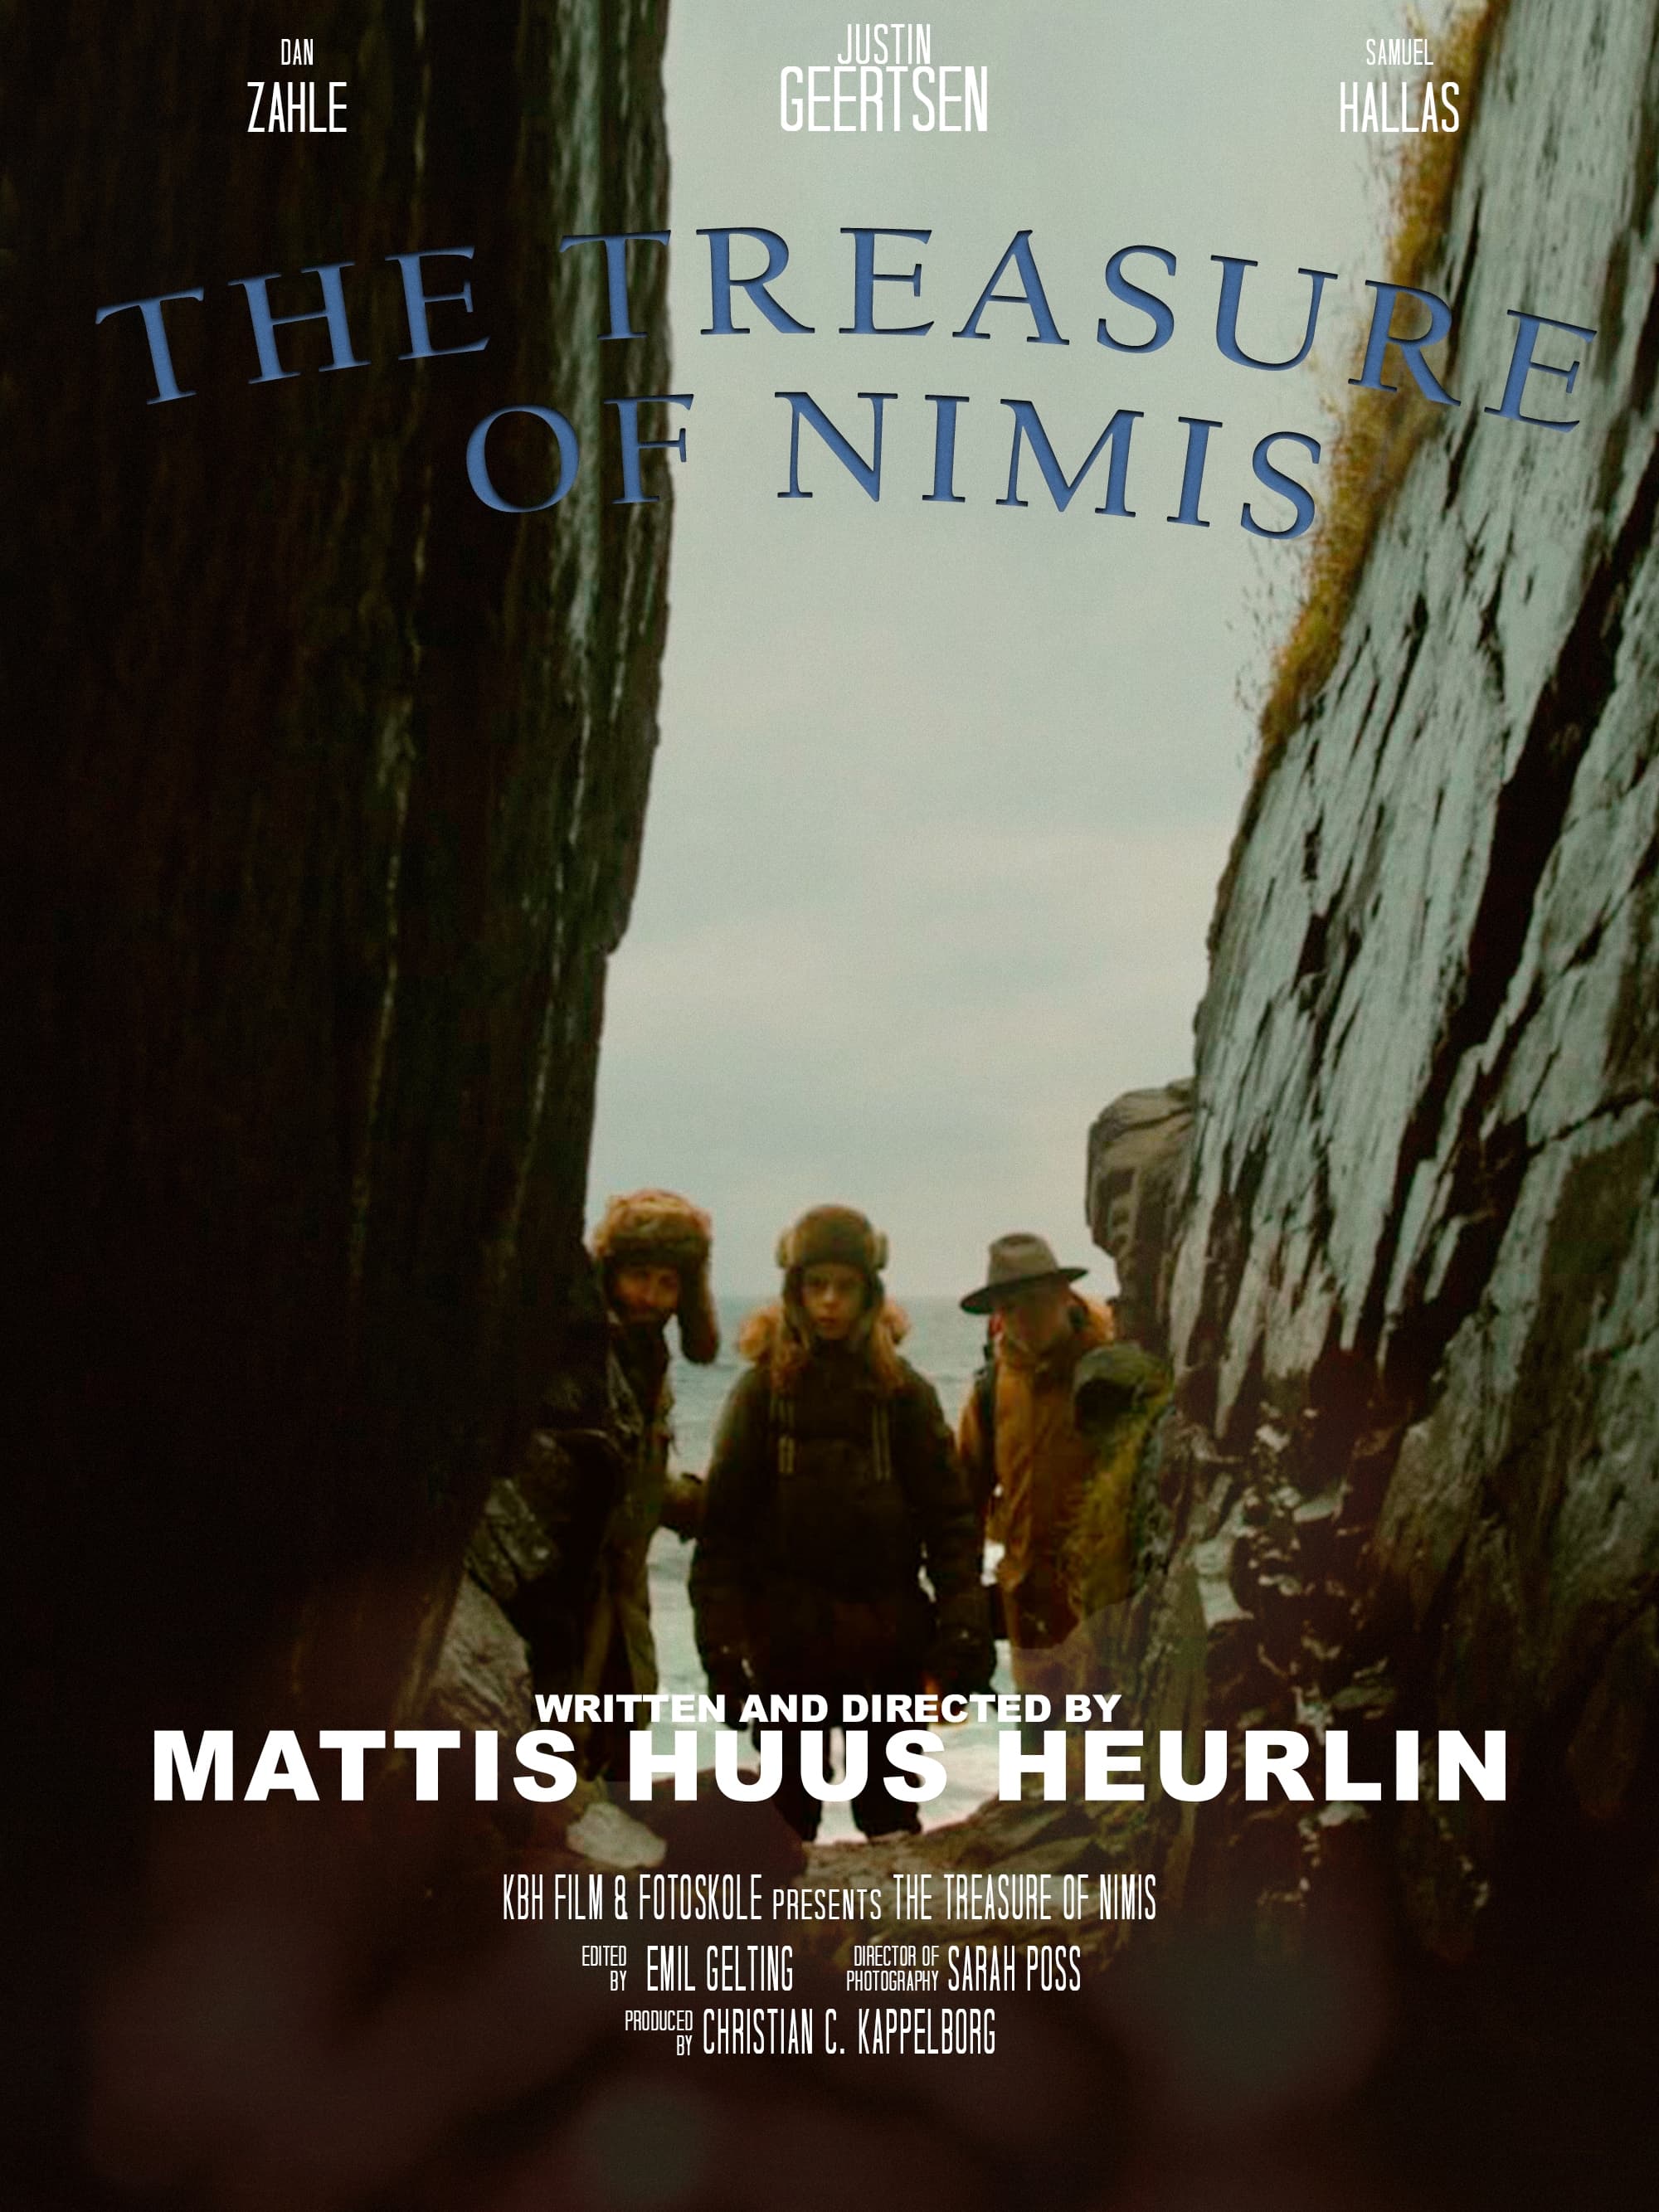 The Treasure of Nimis